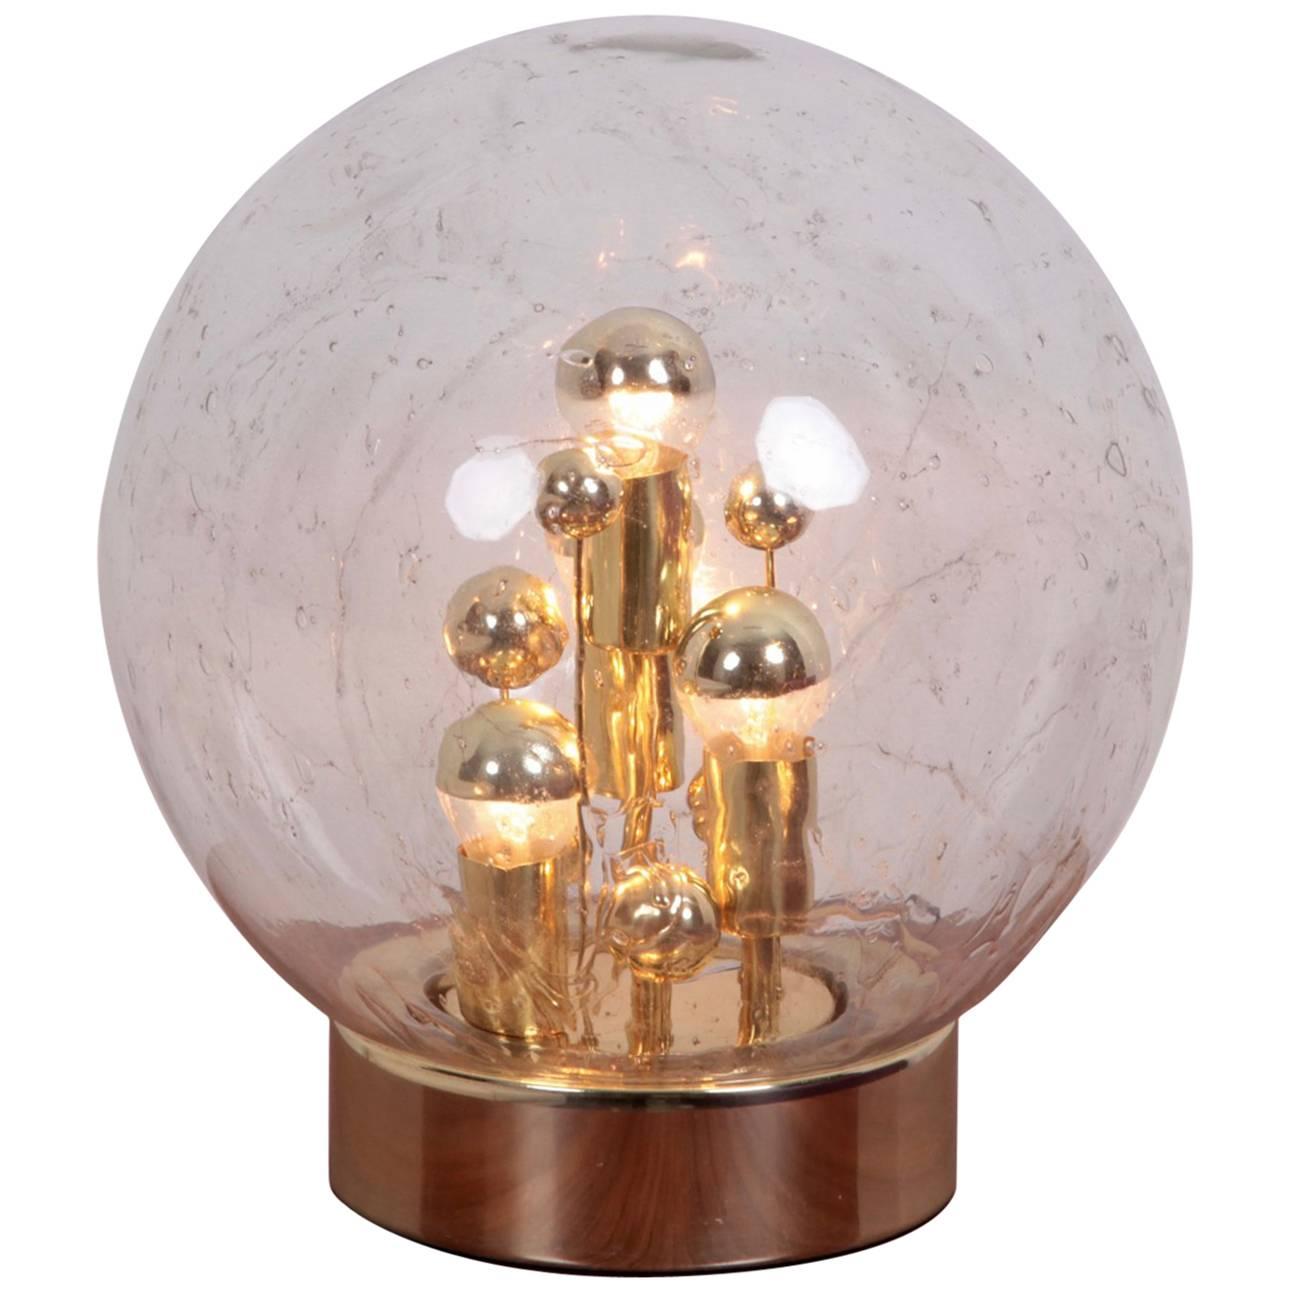 Huge Handblown Glass Globe Table Lamp by Doria For Sale